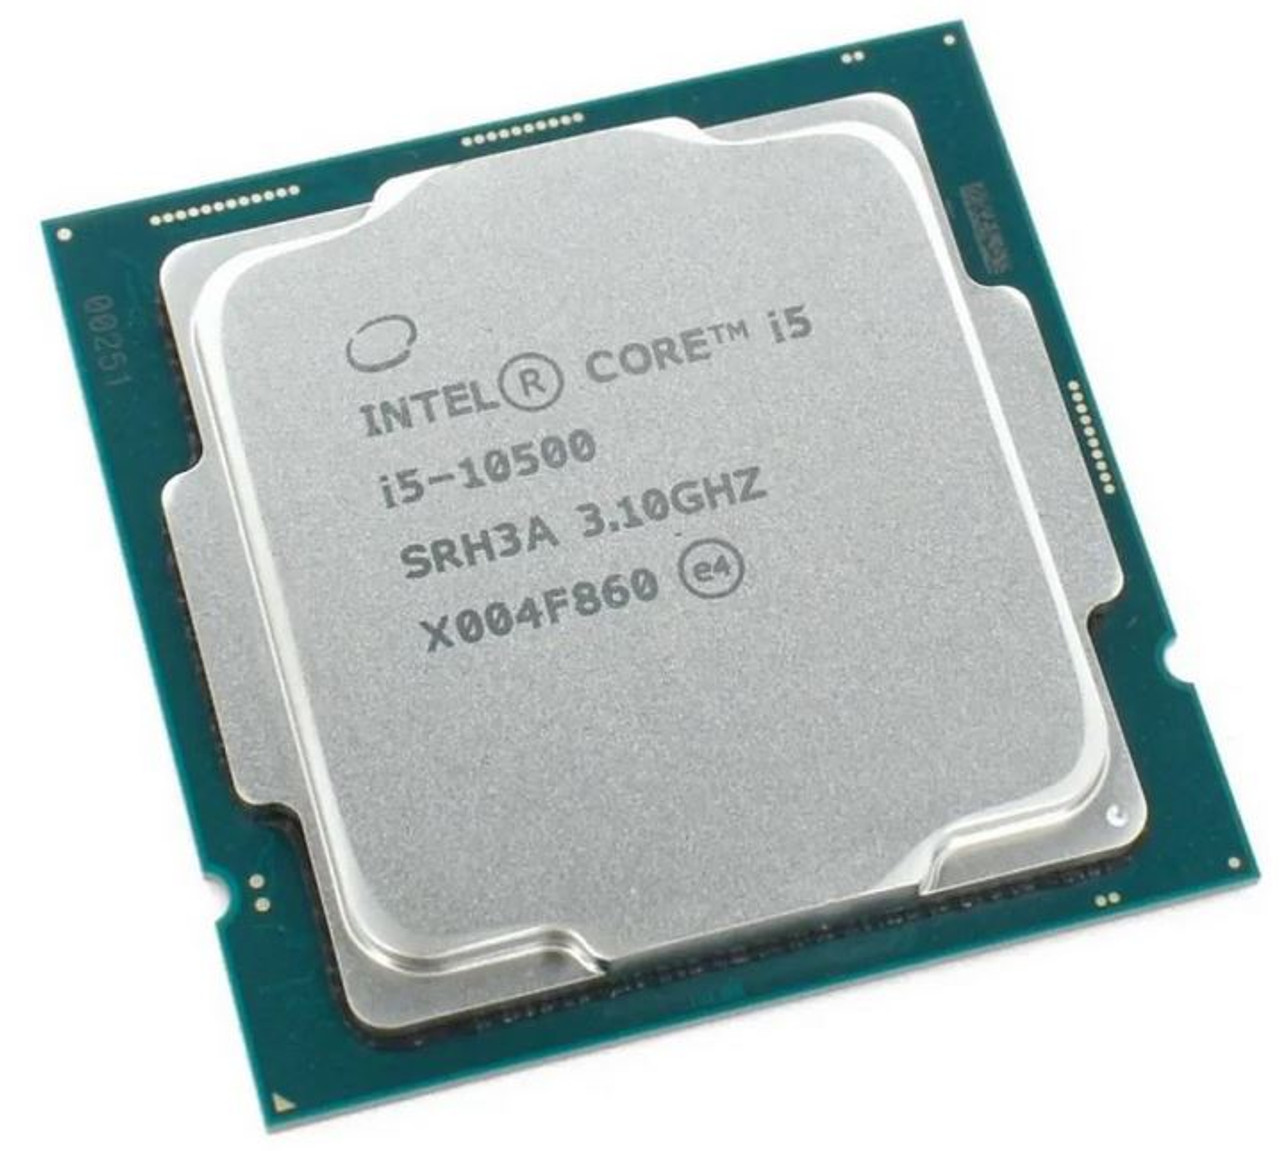 Intel® Core i5-10500 Processor - SRH3A